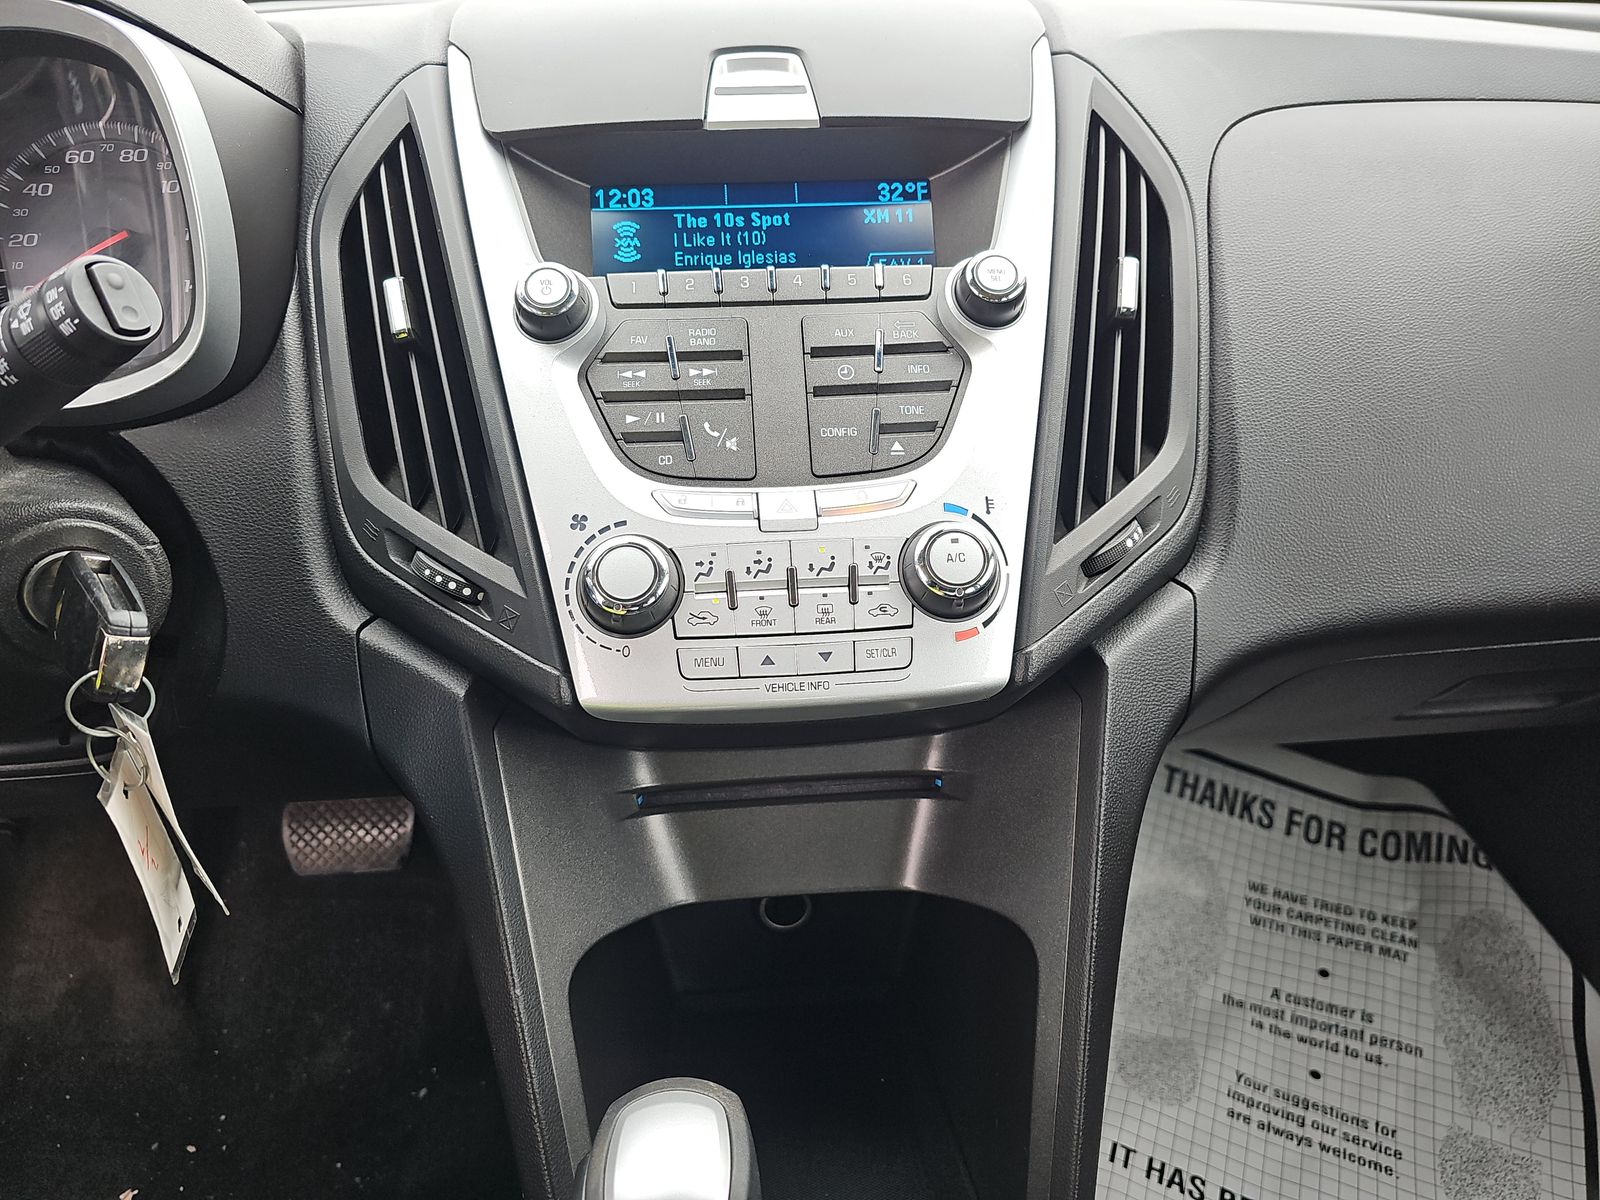 2015 Chevrolet Equinox LS AWD